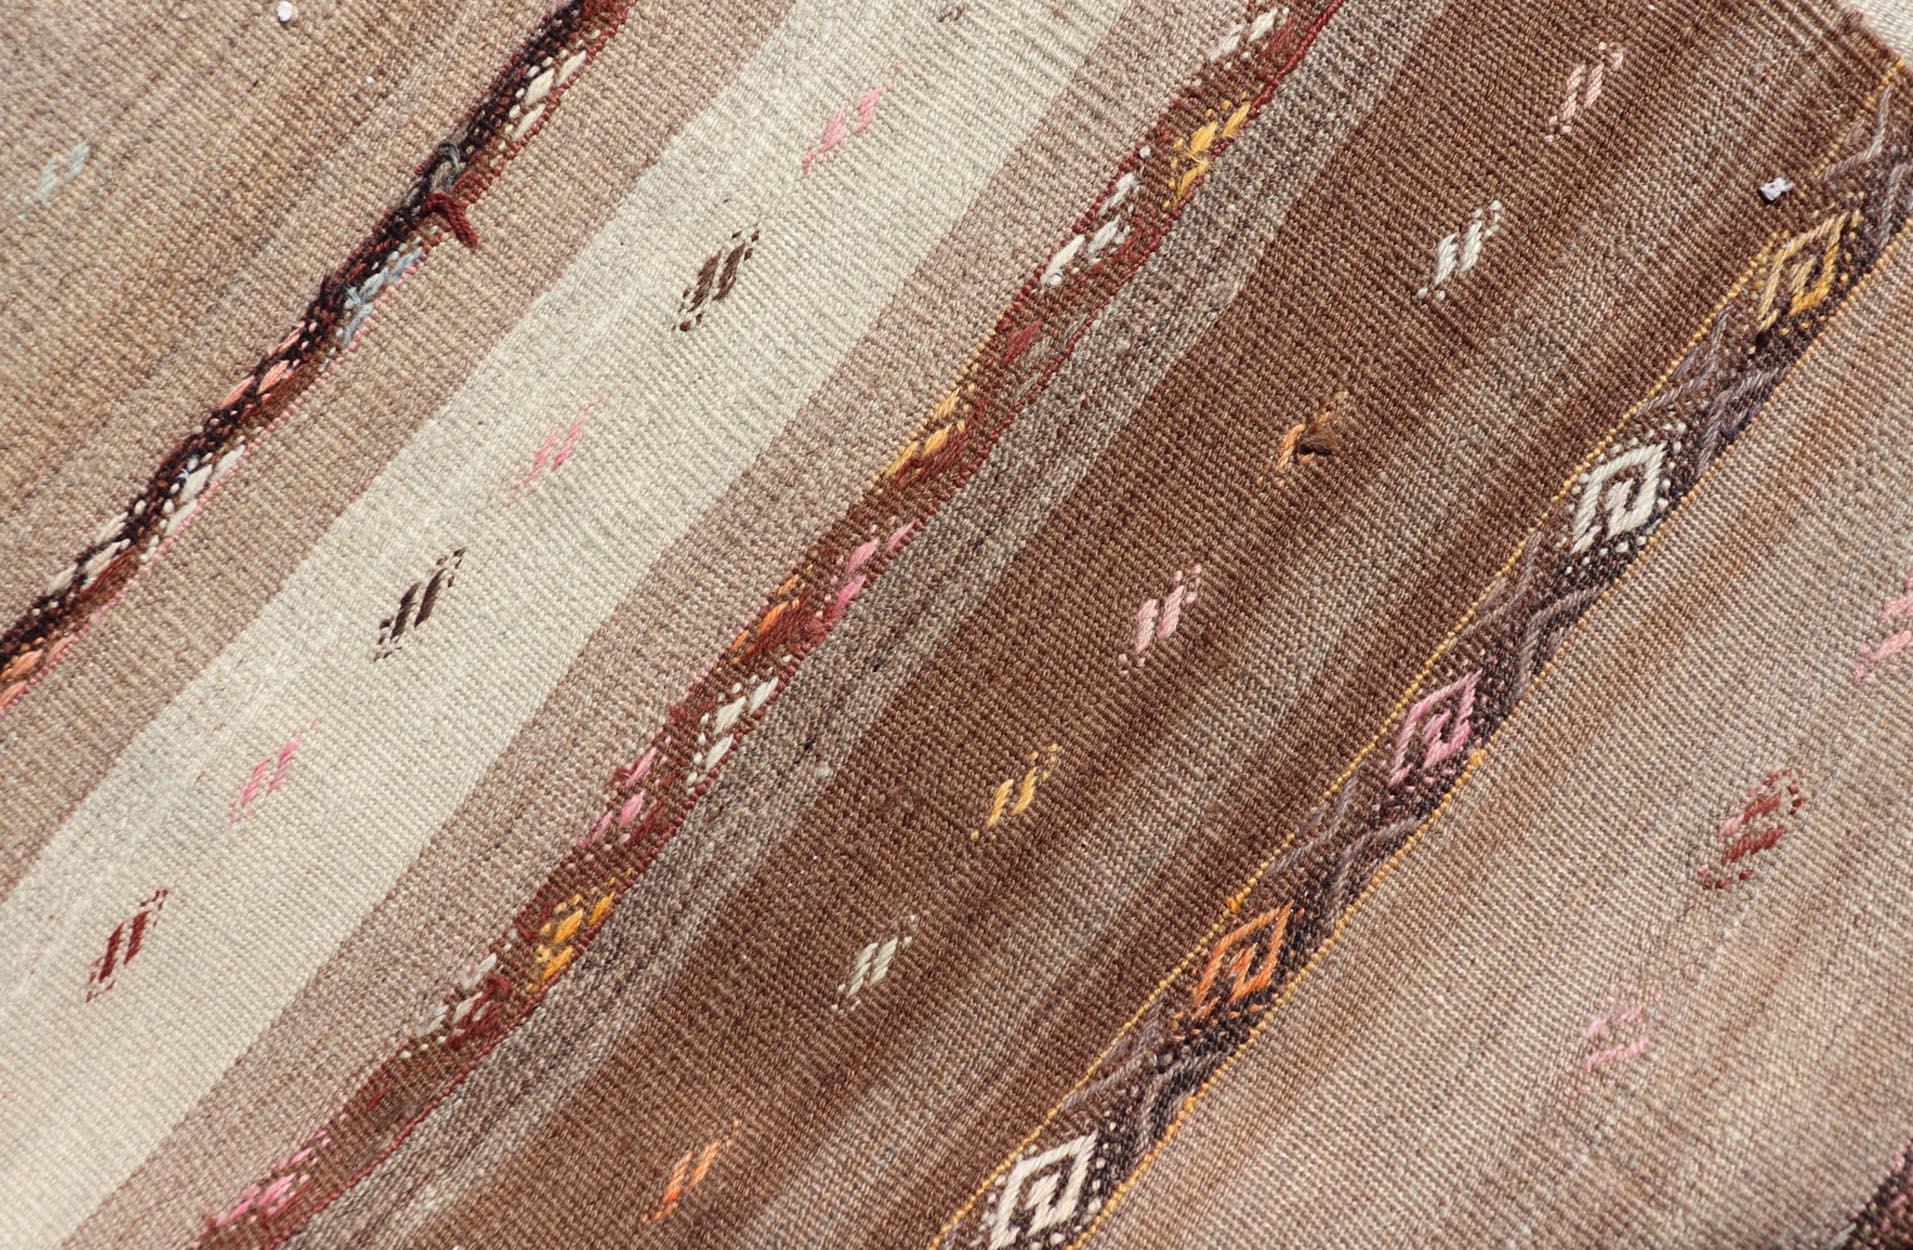 Wool Vintage Earthy Kilim Gallery Runner with Stripe Design in Multi Colors & Motif's For Sale